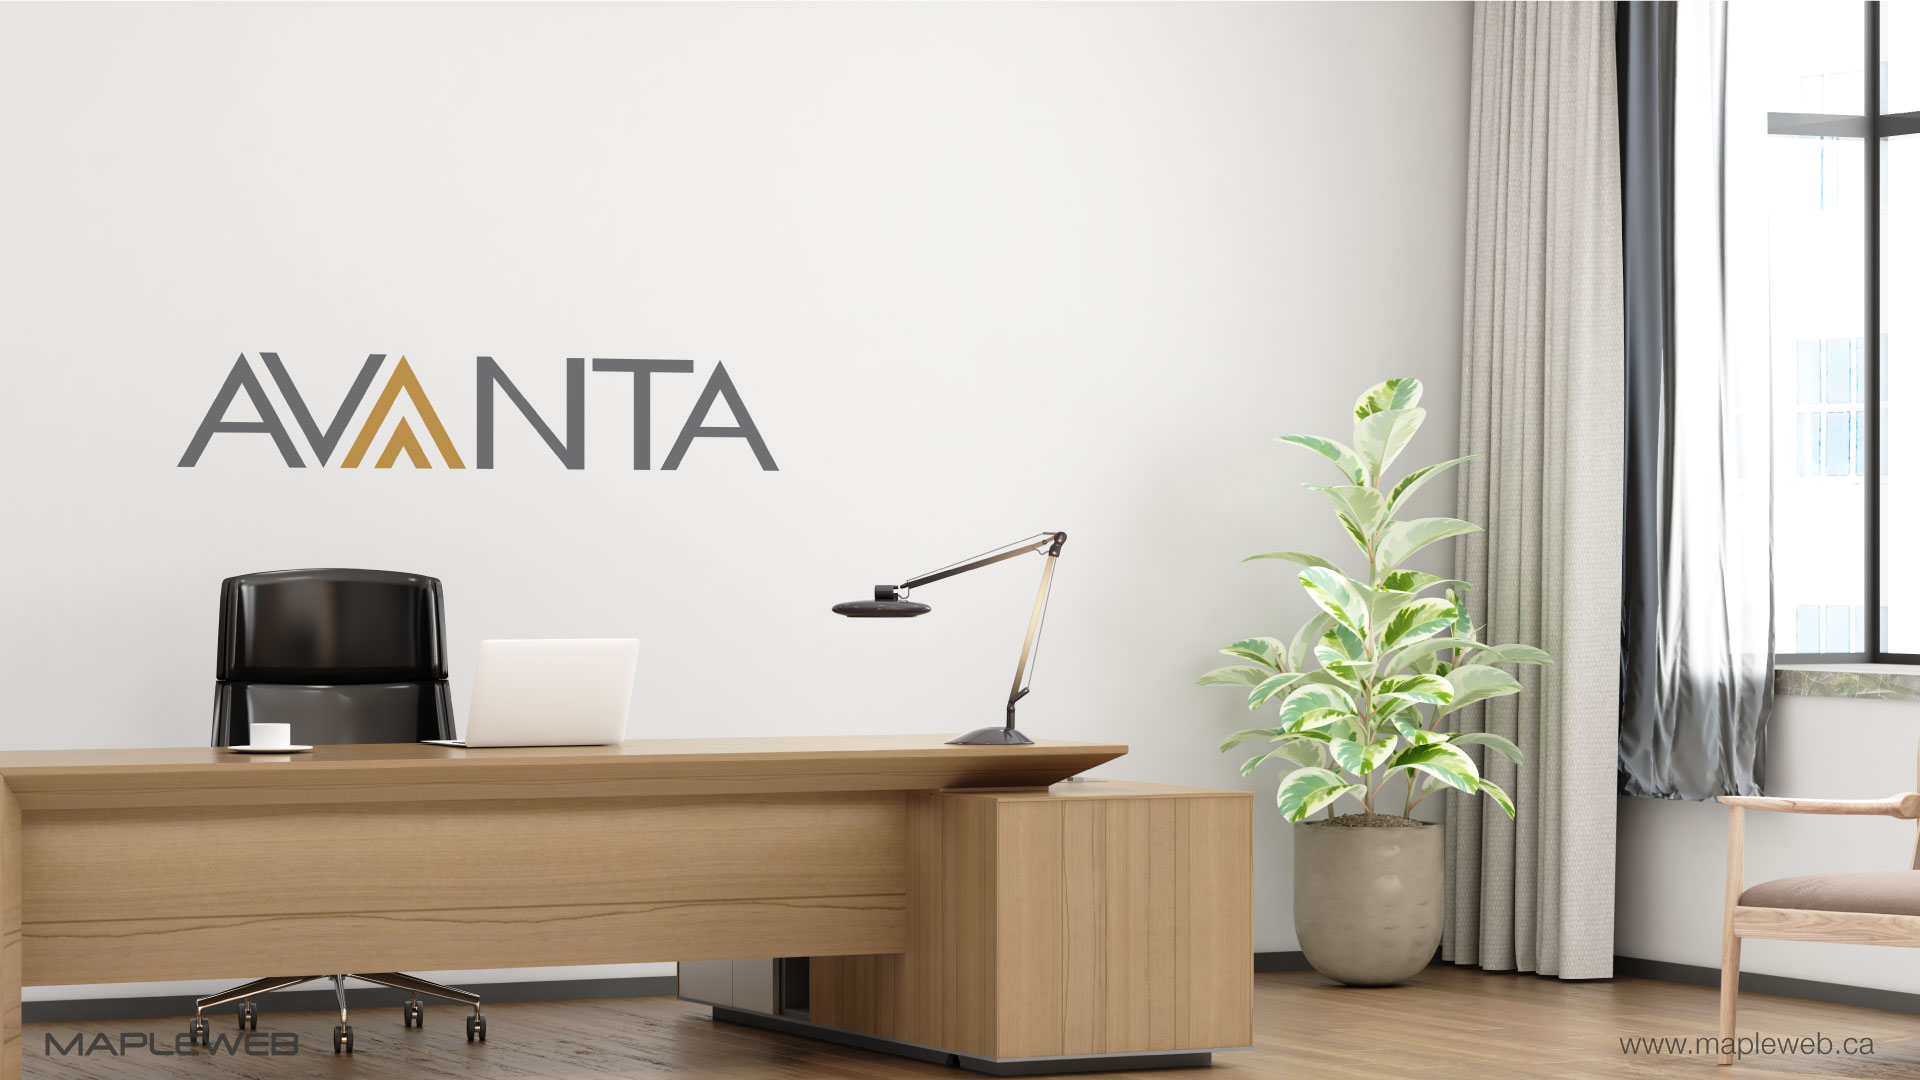 avanta-brand-logo-design-by-mapleweb-vancouver-canada-wall-mock